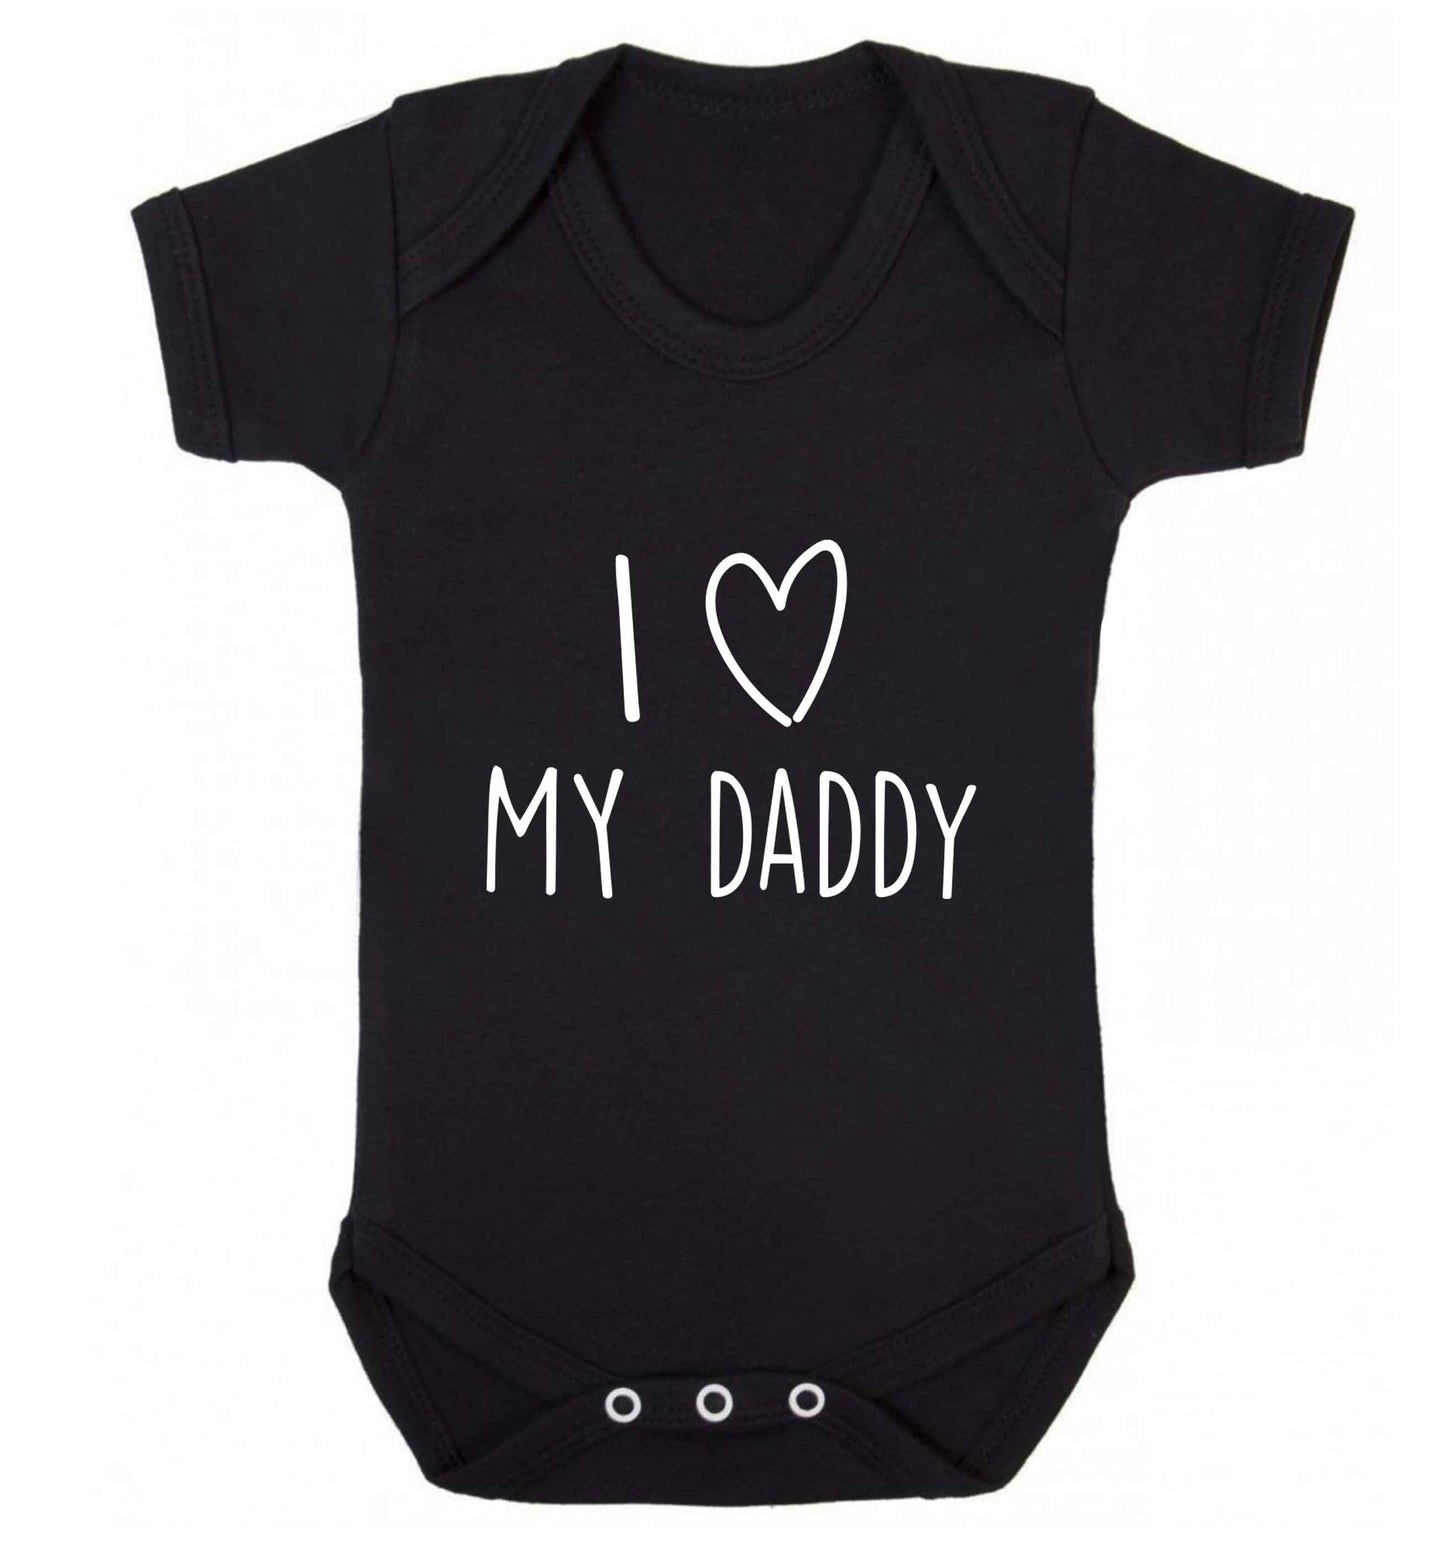 I love my daddy baby vest black 18-24 months